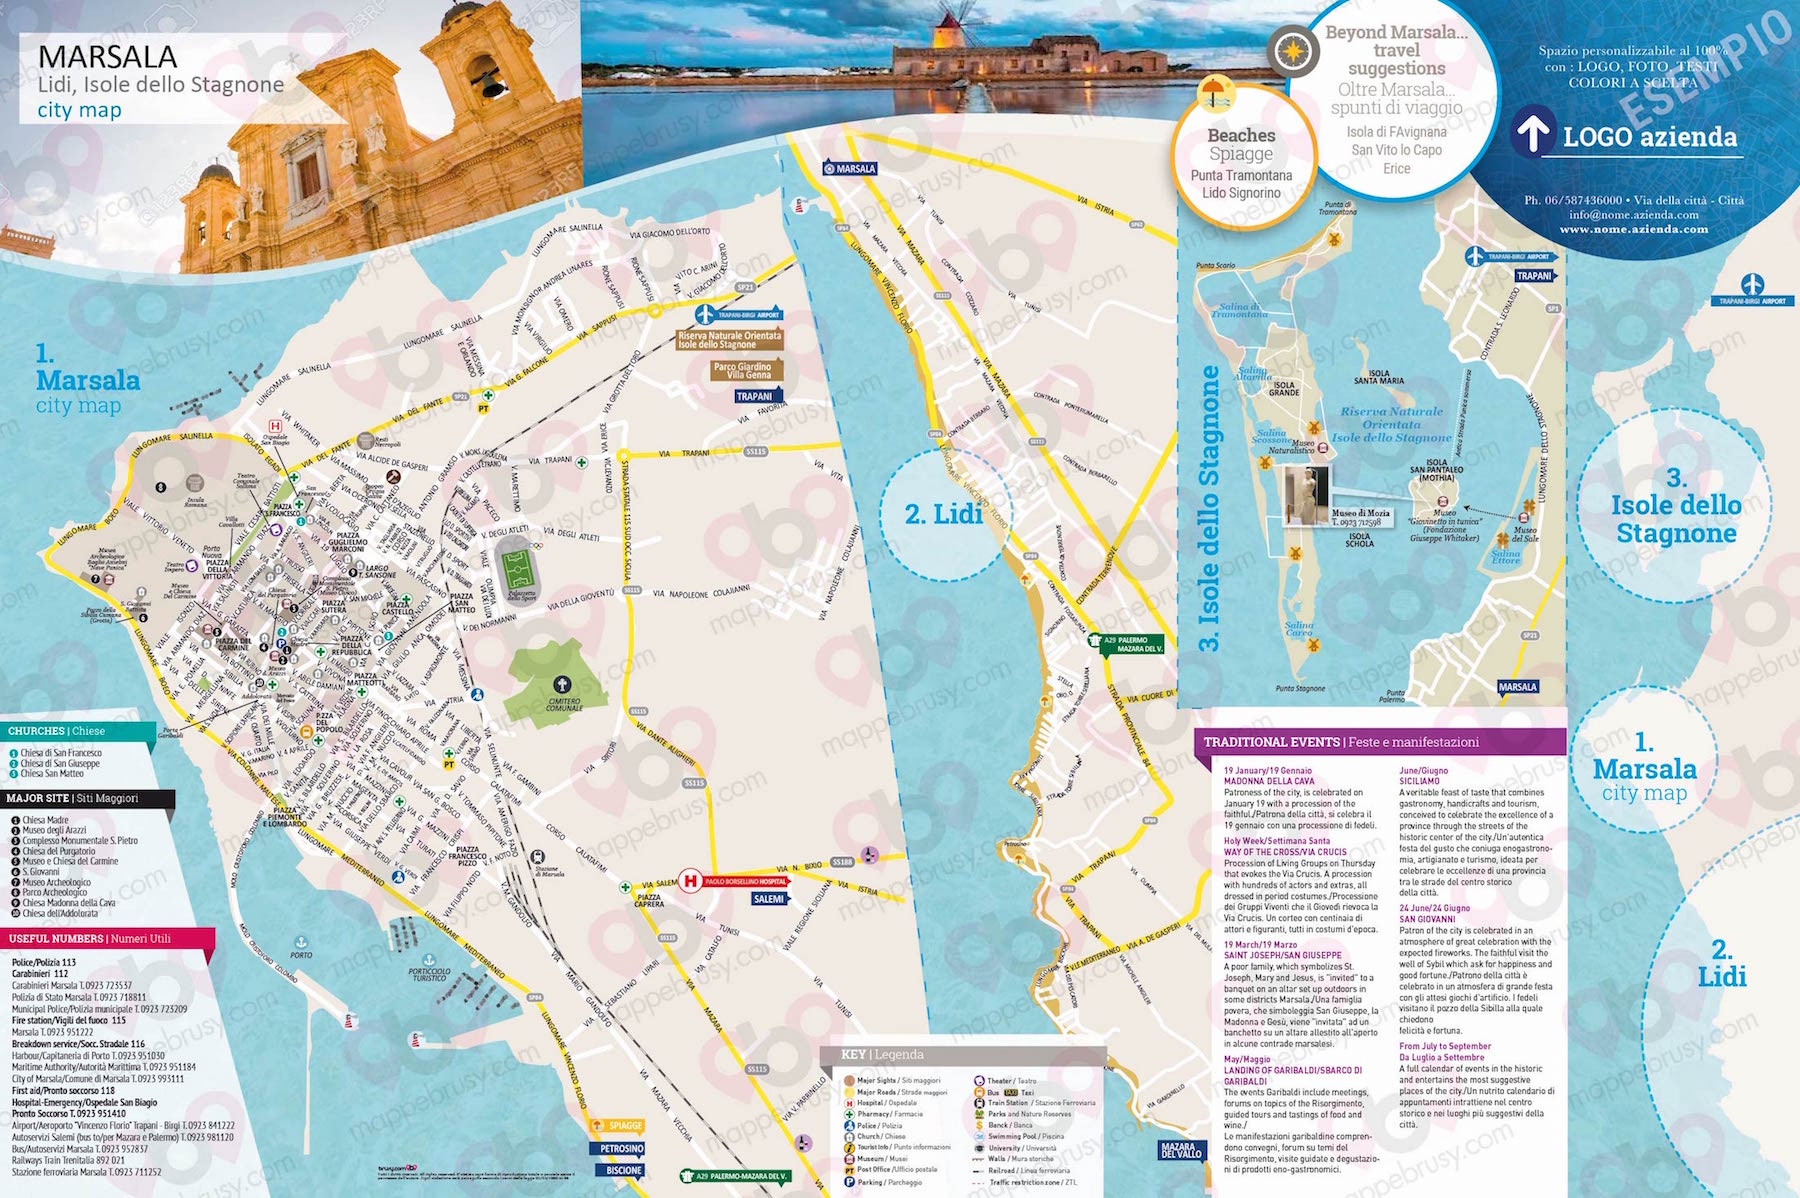 Mappa di Marsala - Marsala city map - mappa Marsala - mappa personalizzata di Marsala - mappa tursitica di Marsala